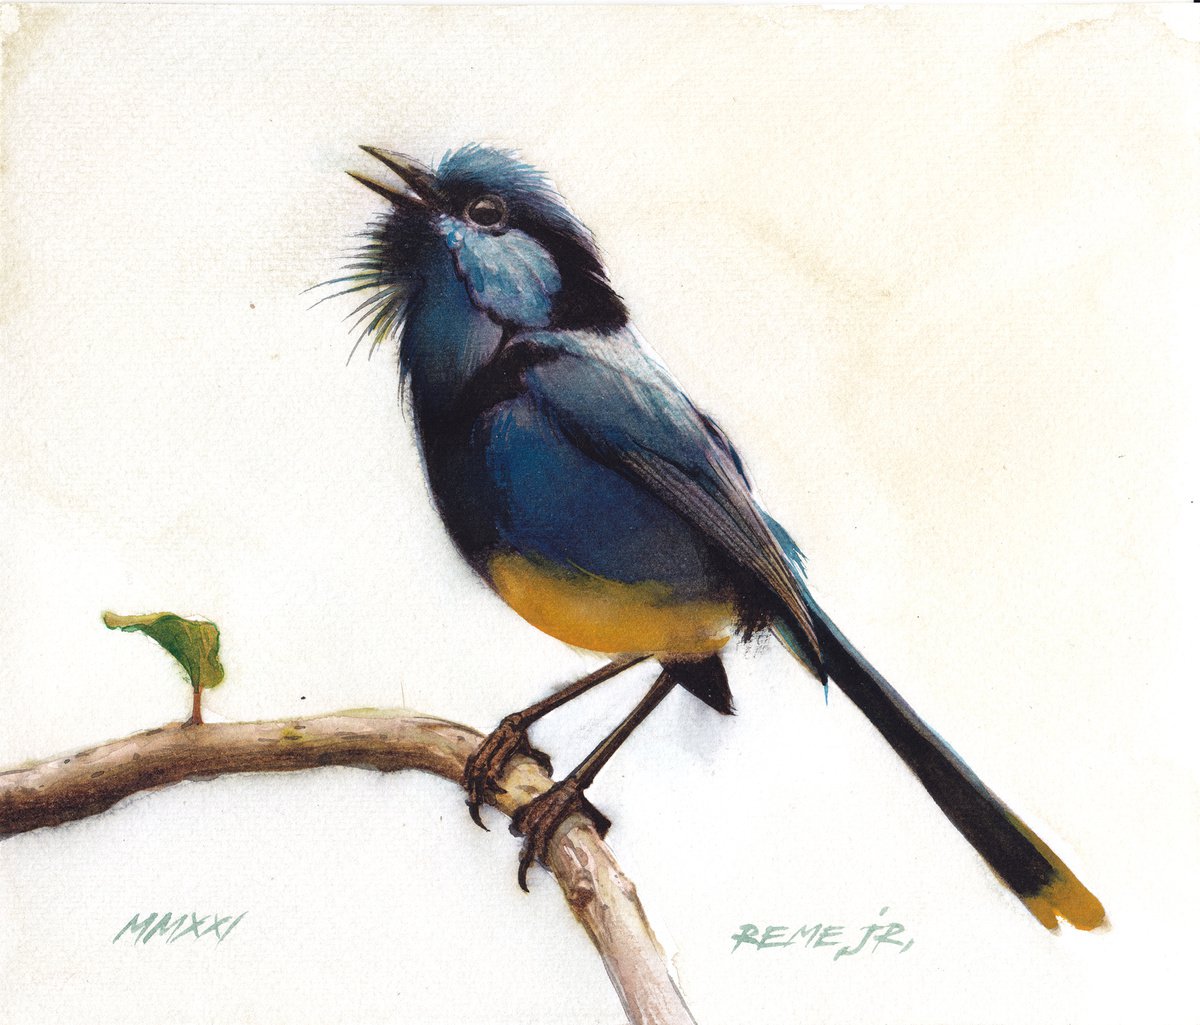 BIRD CLXVII by REME Jr.